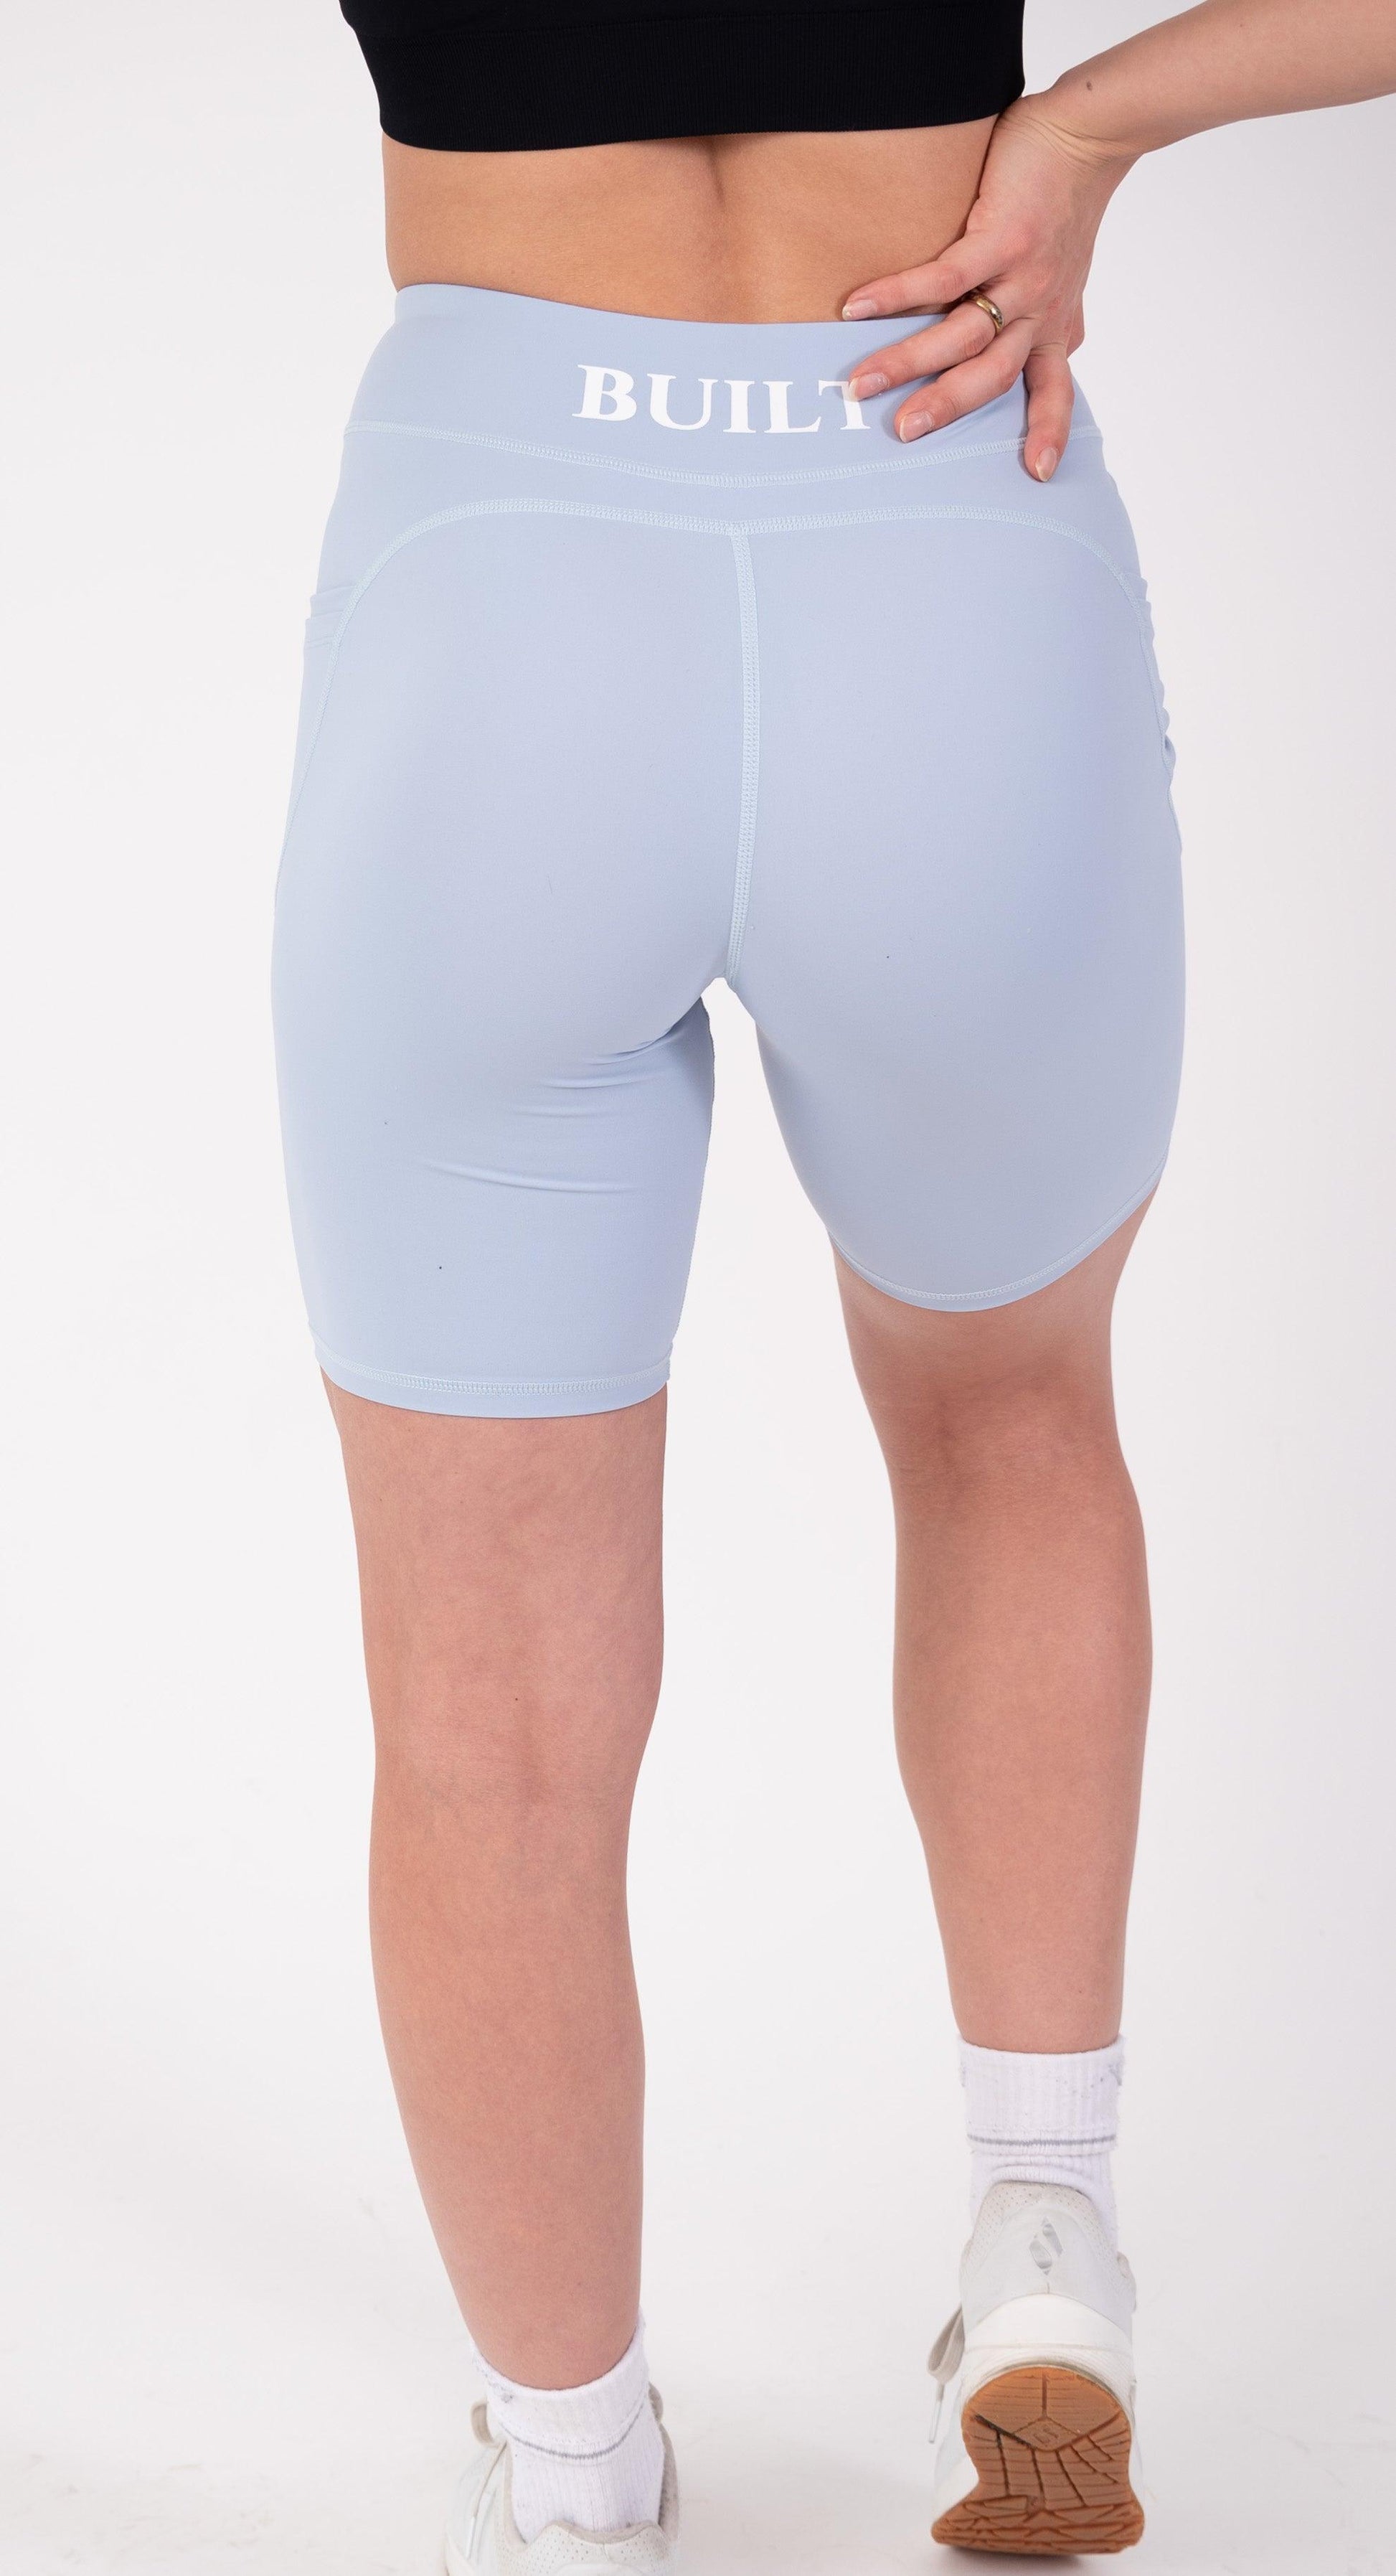 Strengthen Pocket Shorts 7" Powder blue - builtwear